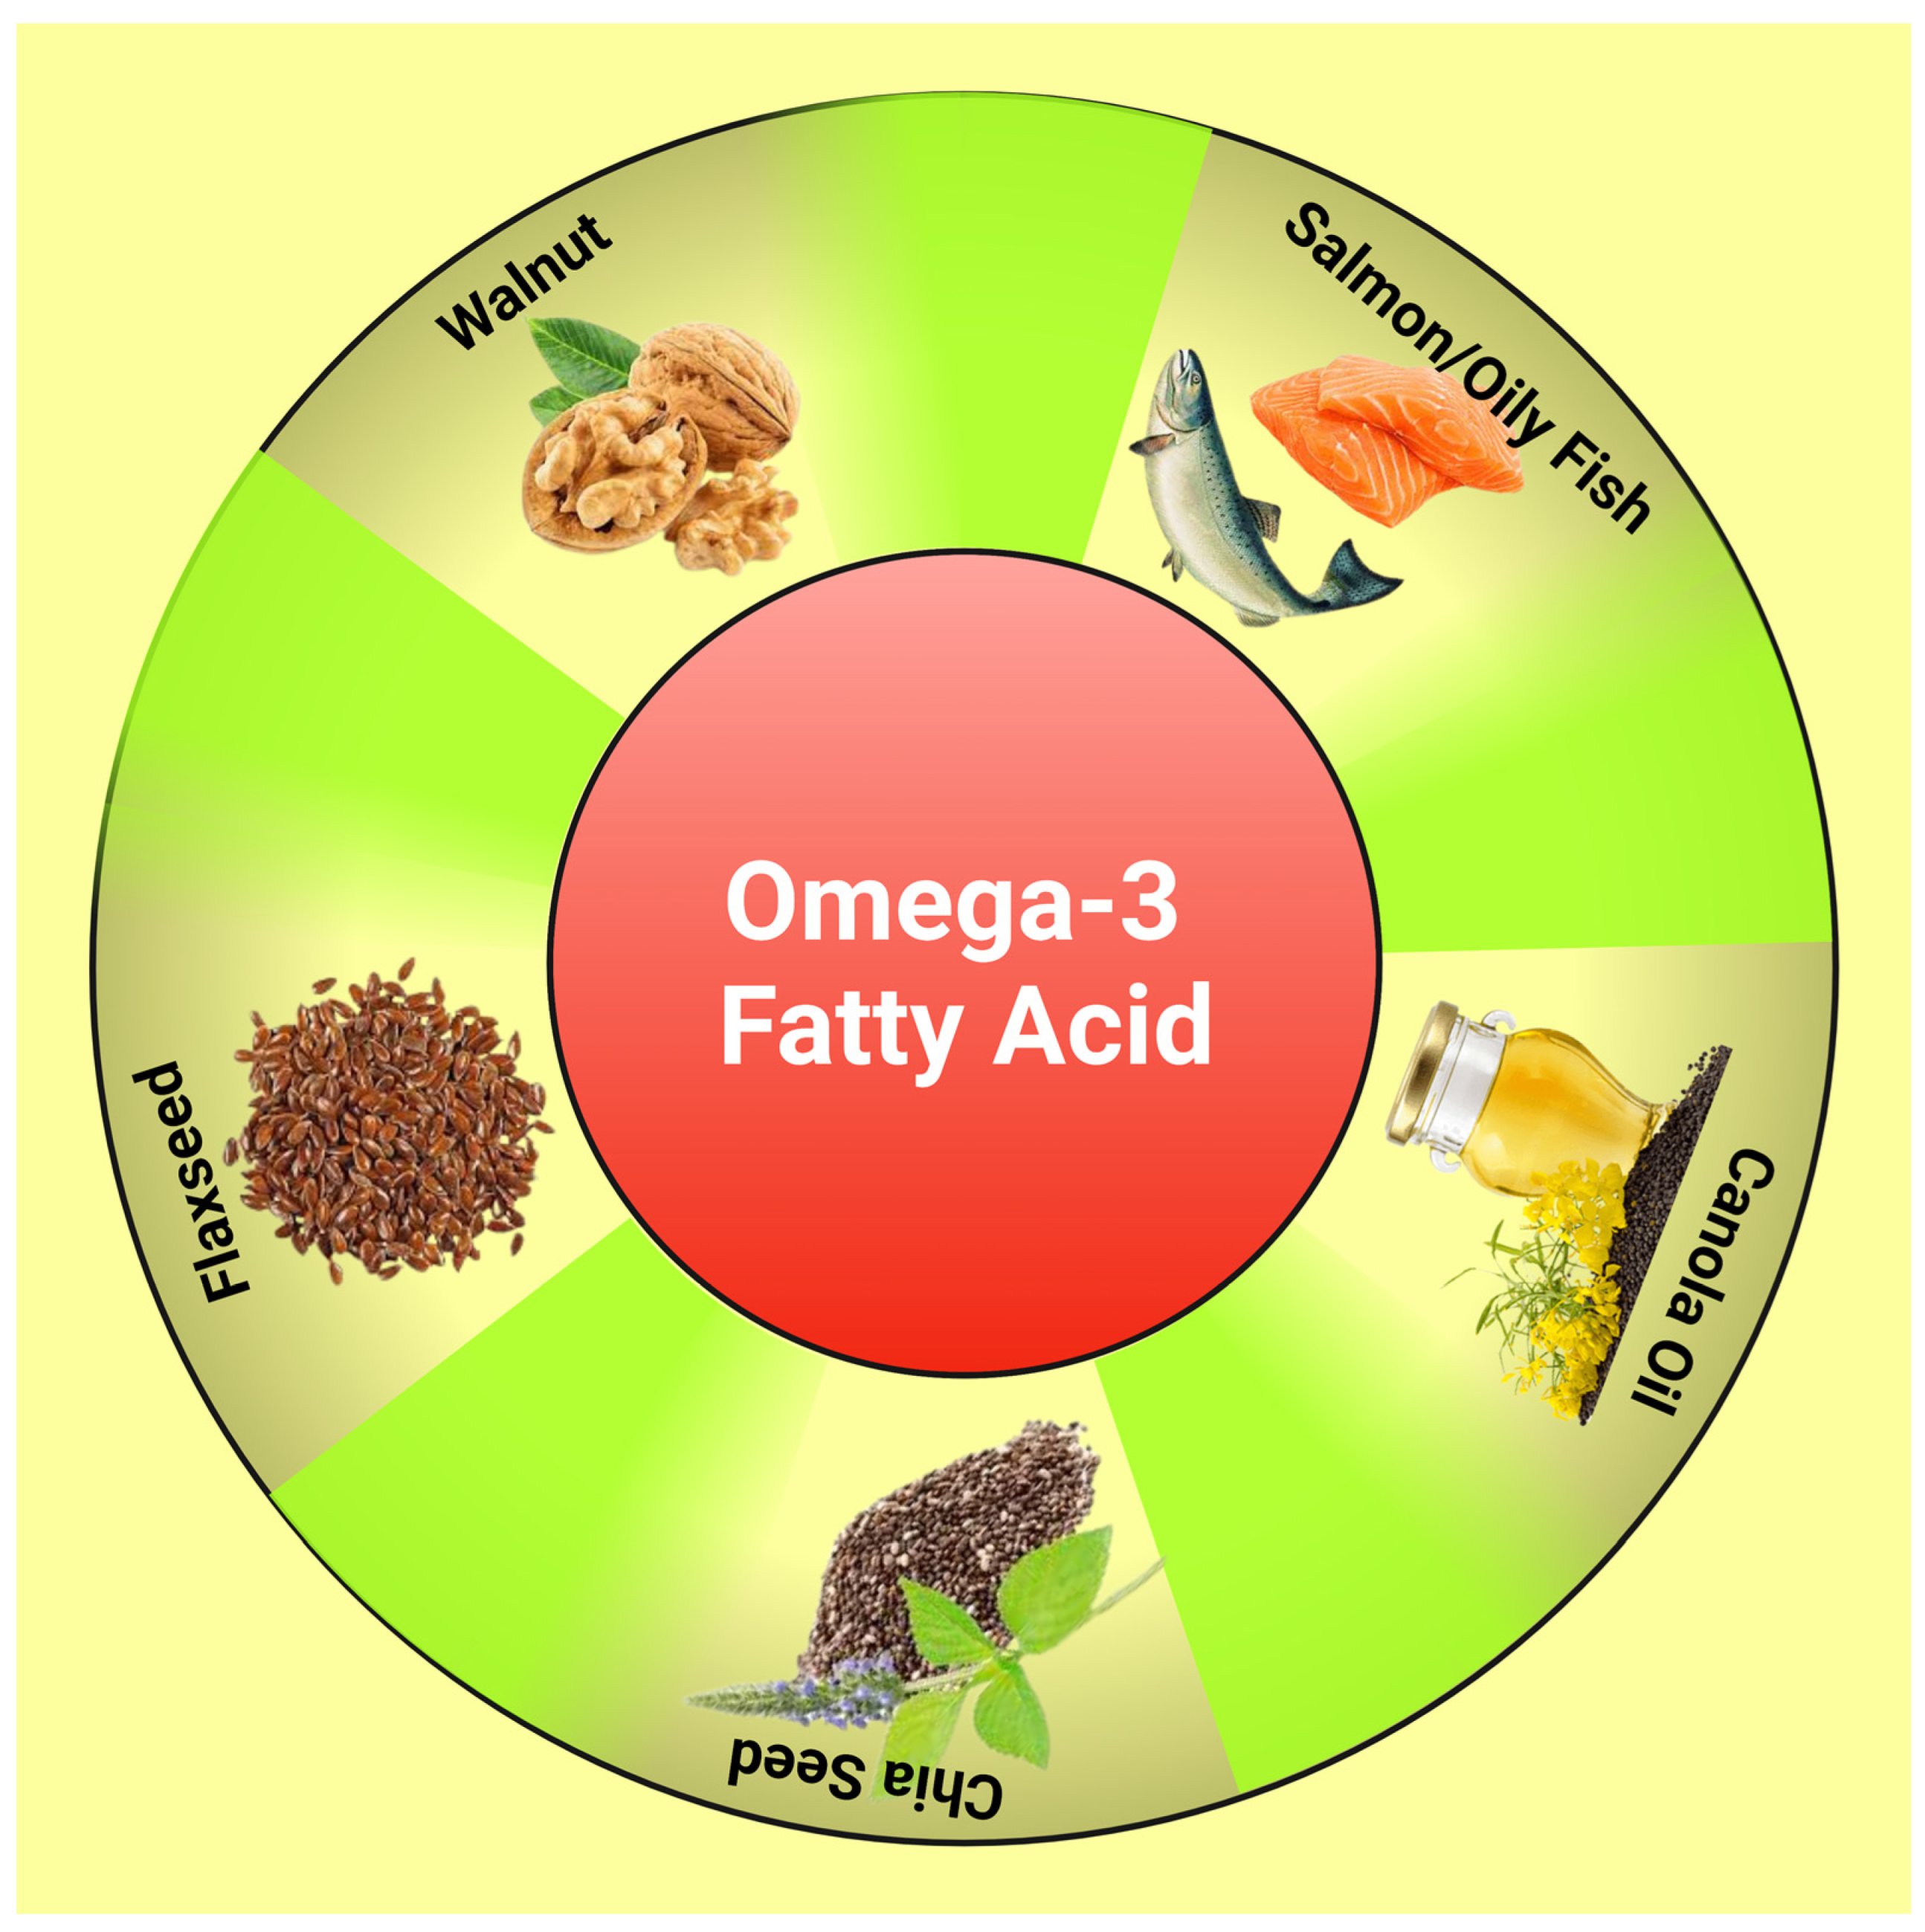 Omega- fats